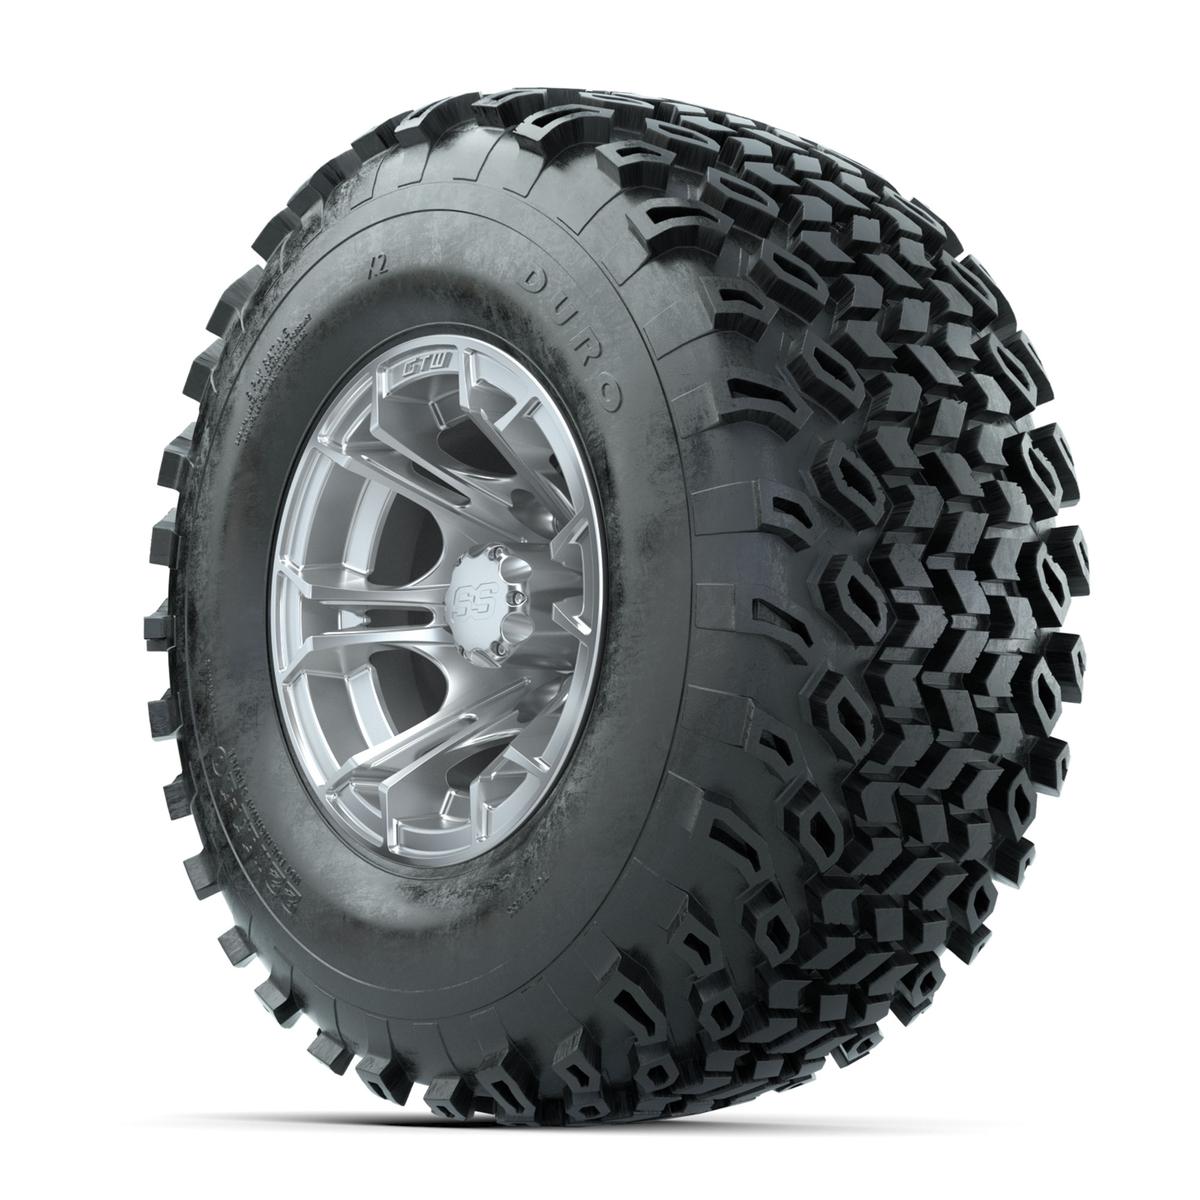 GTW Spyder Silver Brush 10 in Wheels with 22x11-10 Duro Desert All Terrain Tires – Full Set